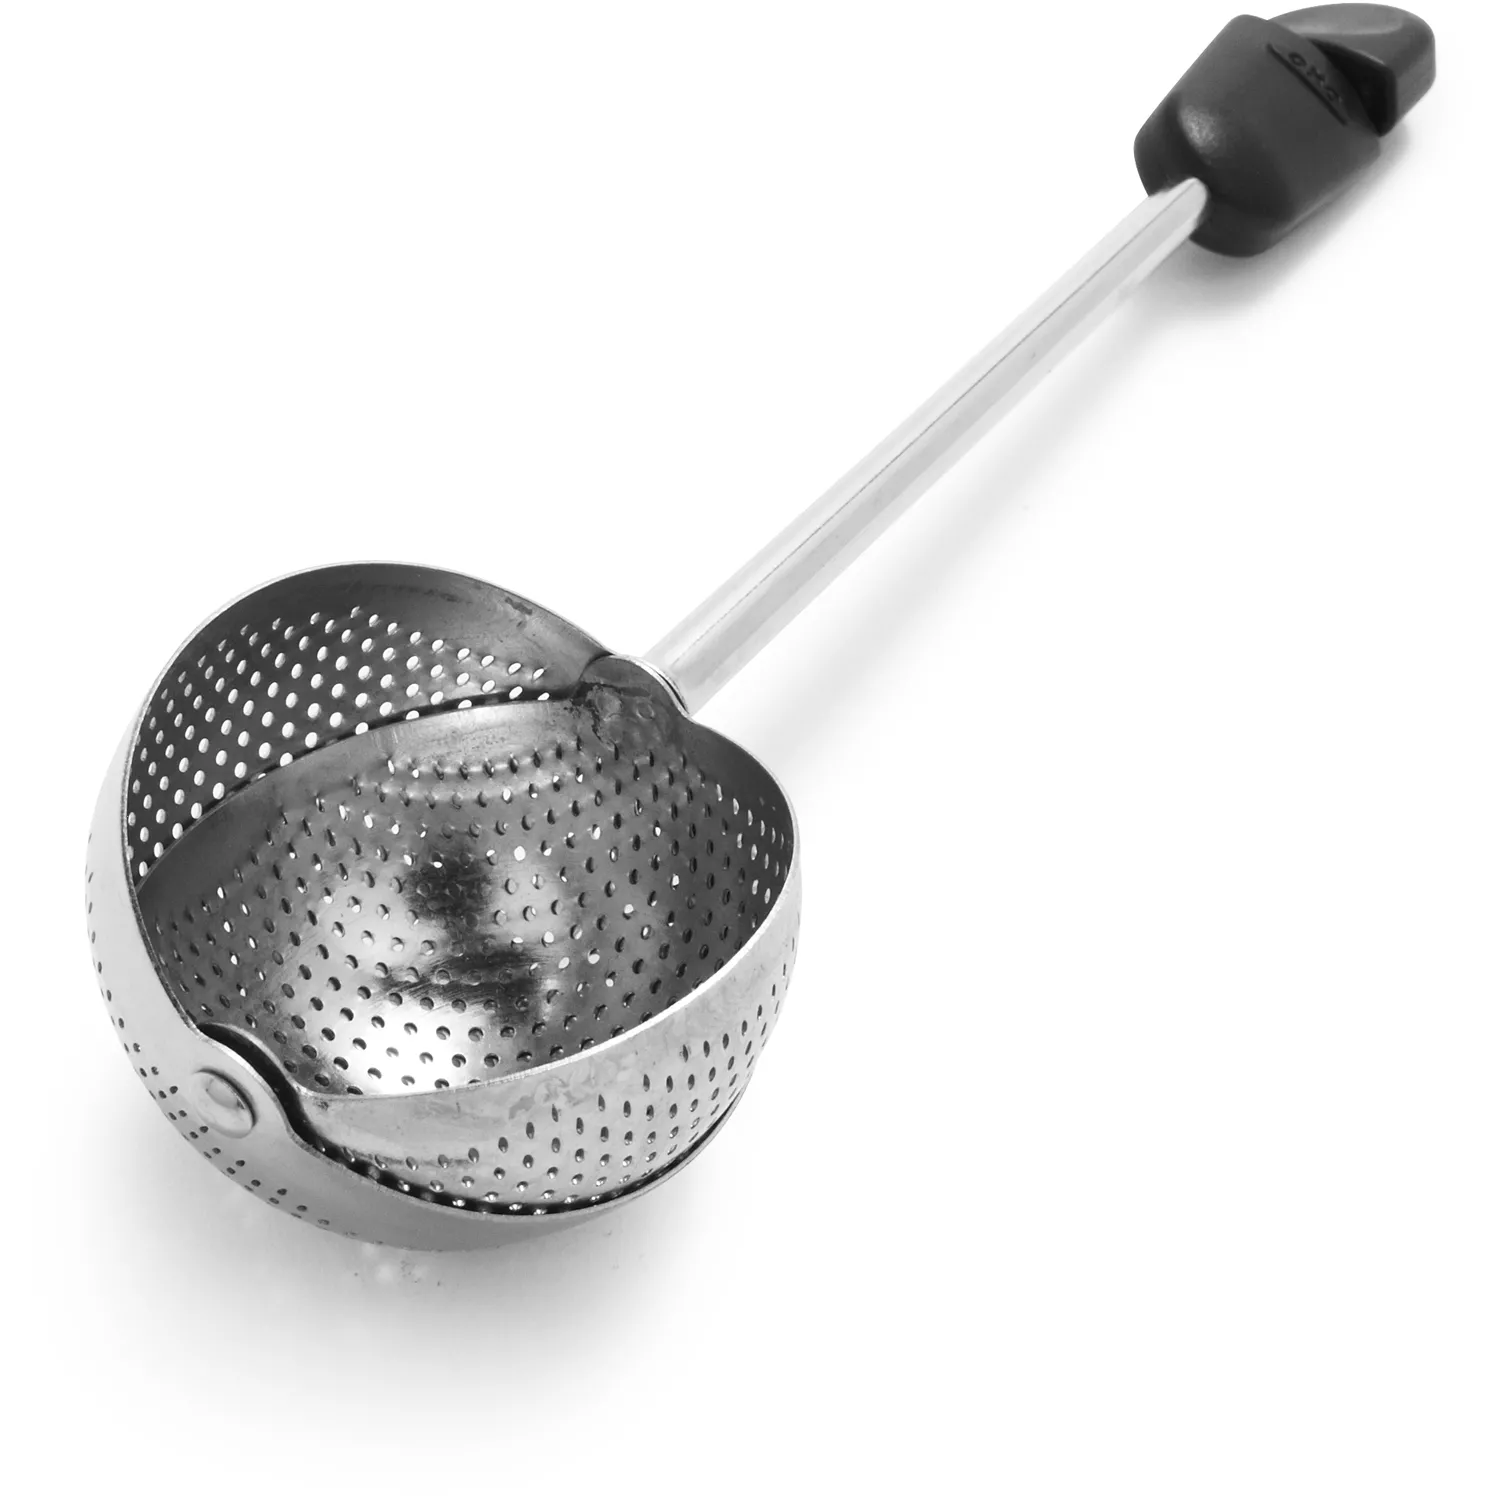 OXO Brew Tea Infuser Basket - Spoons N Spice